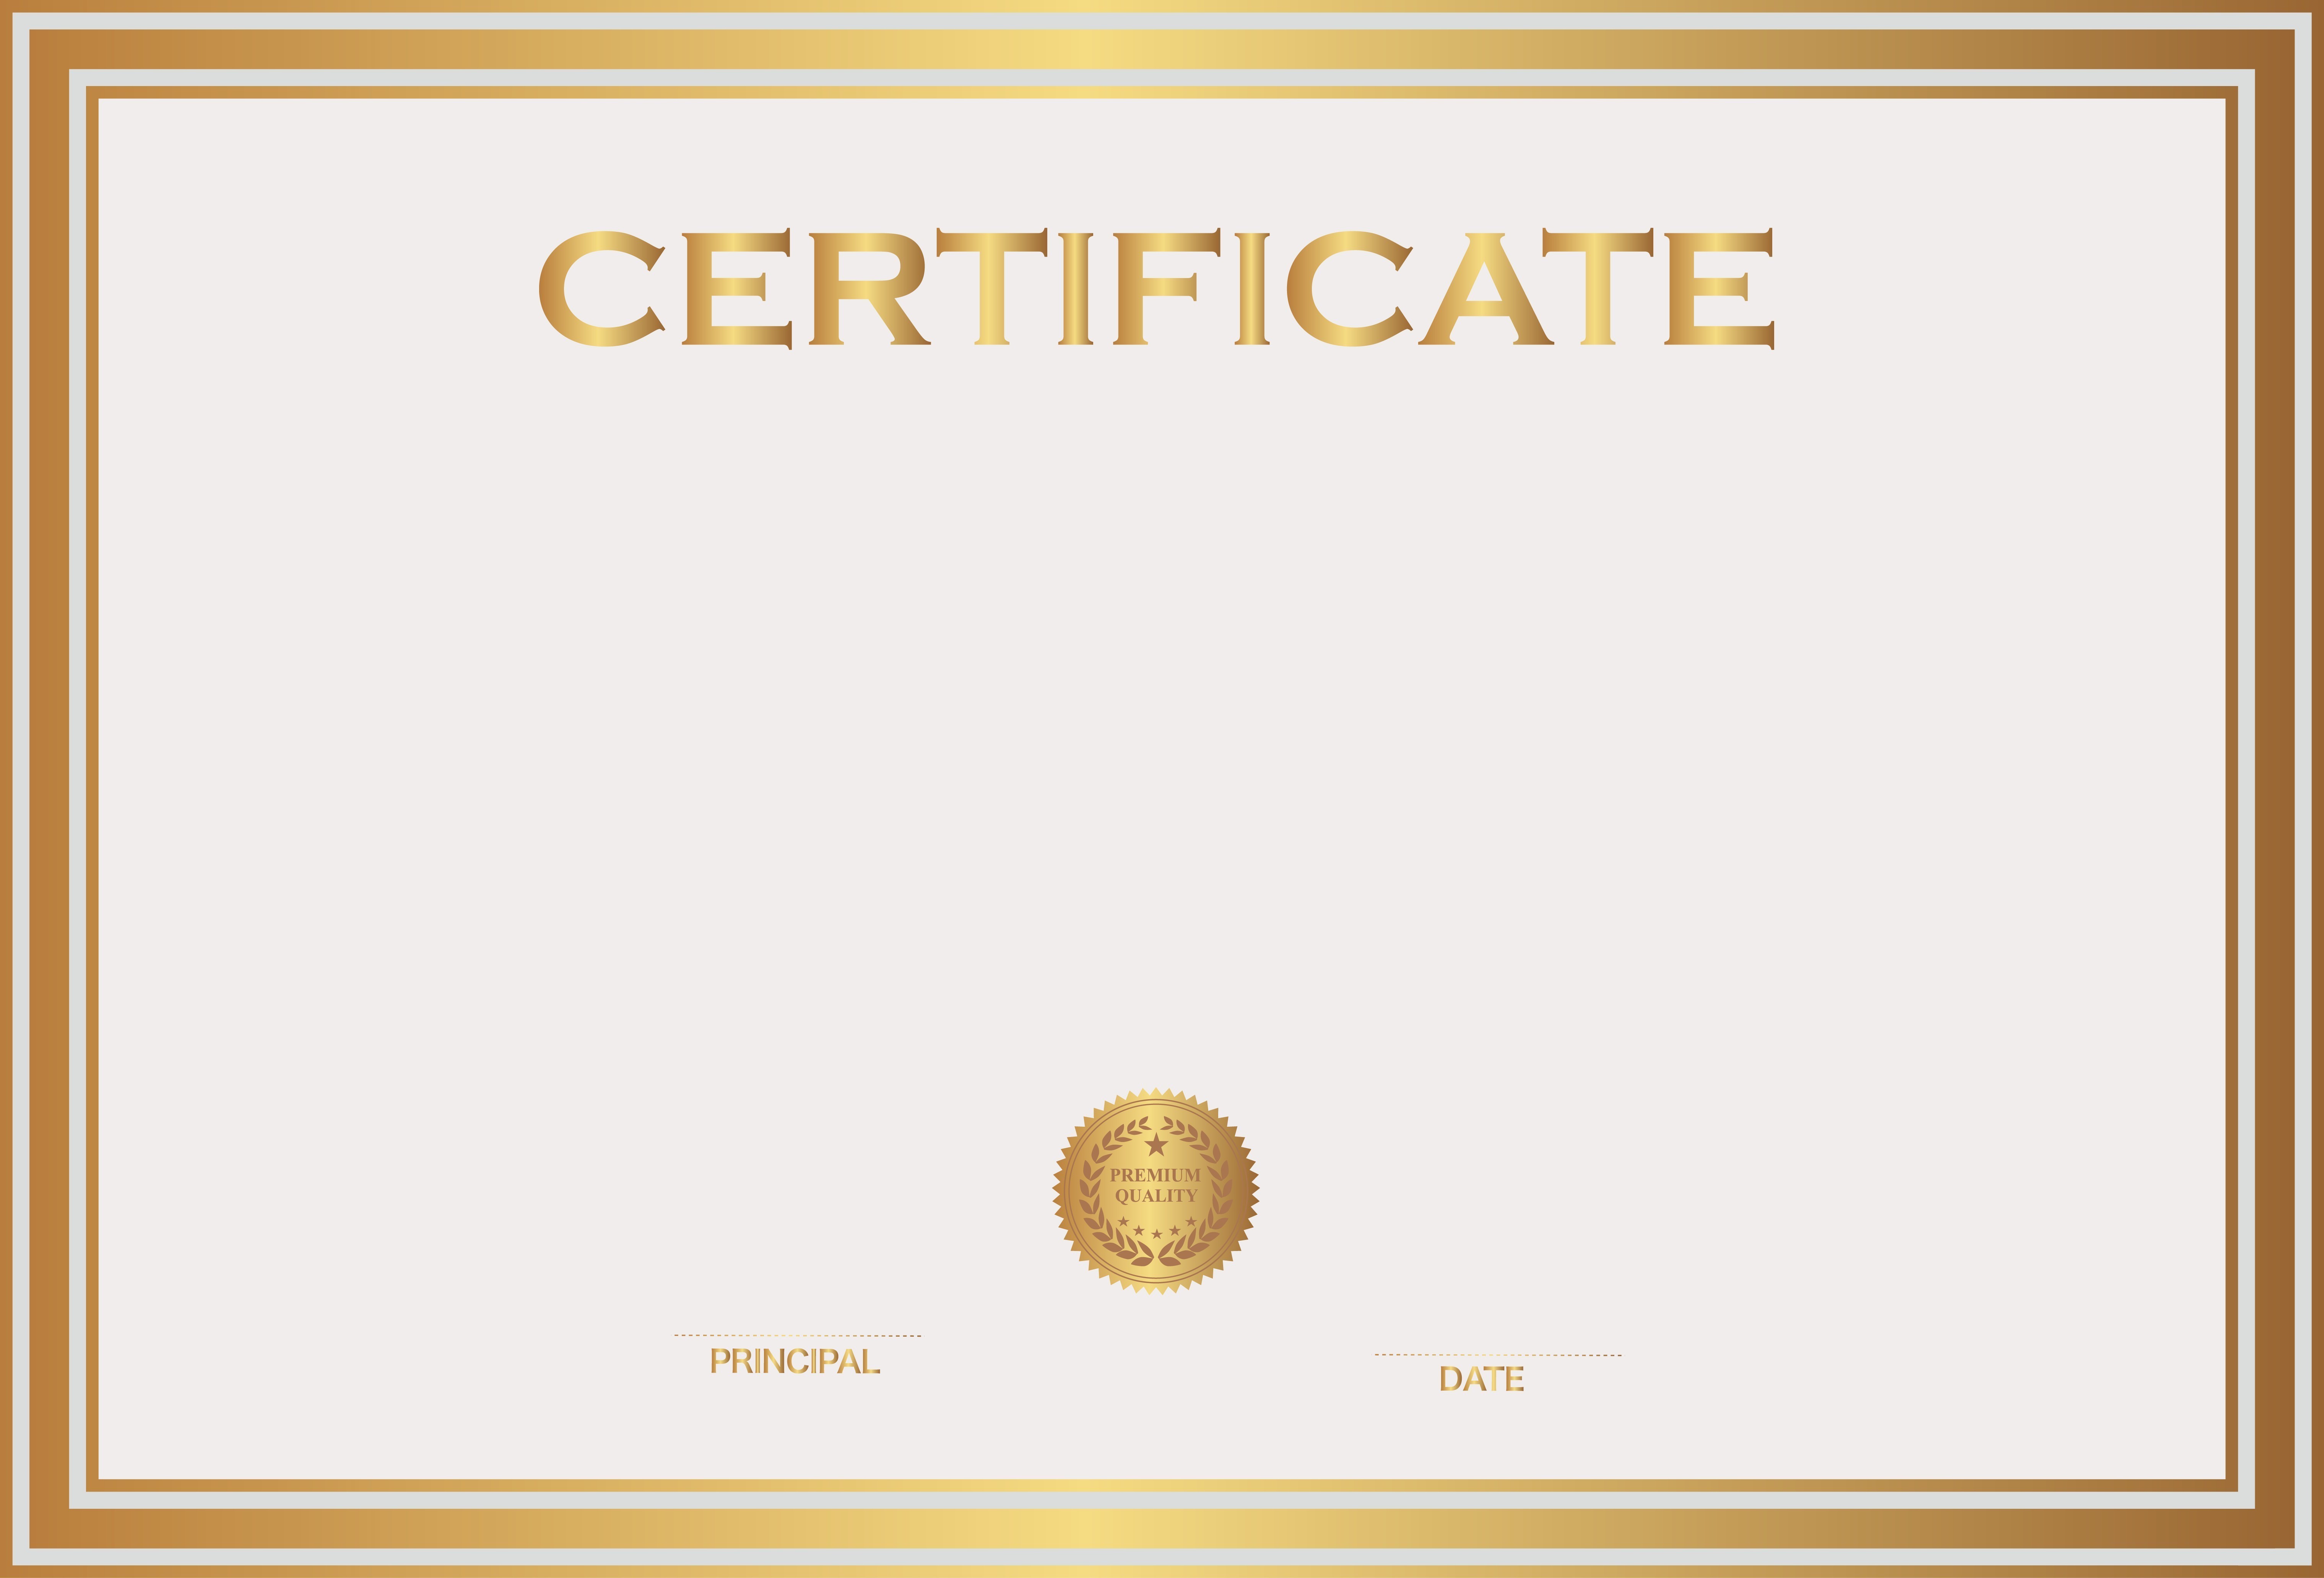 Award Certificate Template Border Fresh Red Certificate Template Png Clip  Art Image New Award Certificate Template Gold Border Fresh Certificate  Template